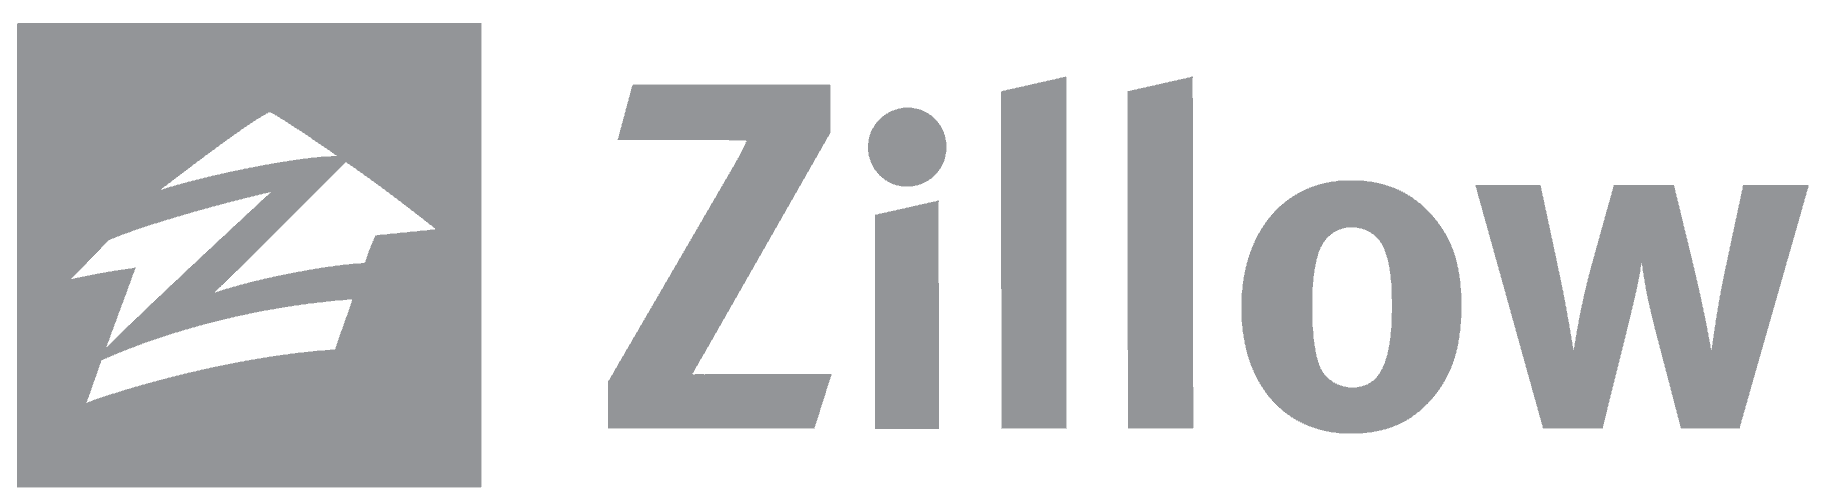 Zillow_logo